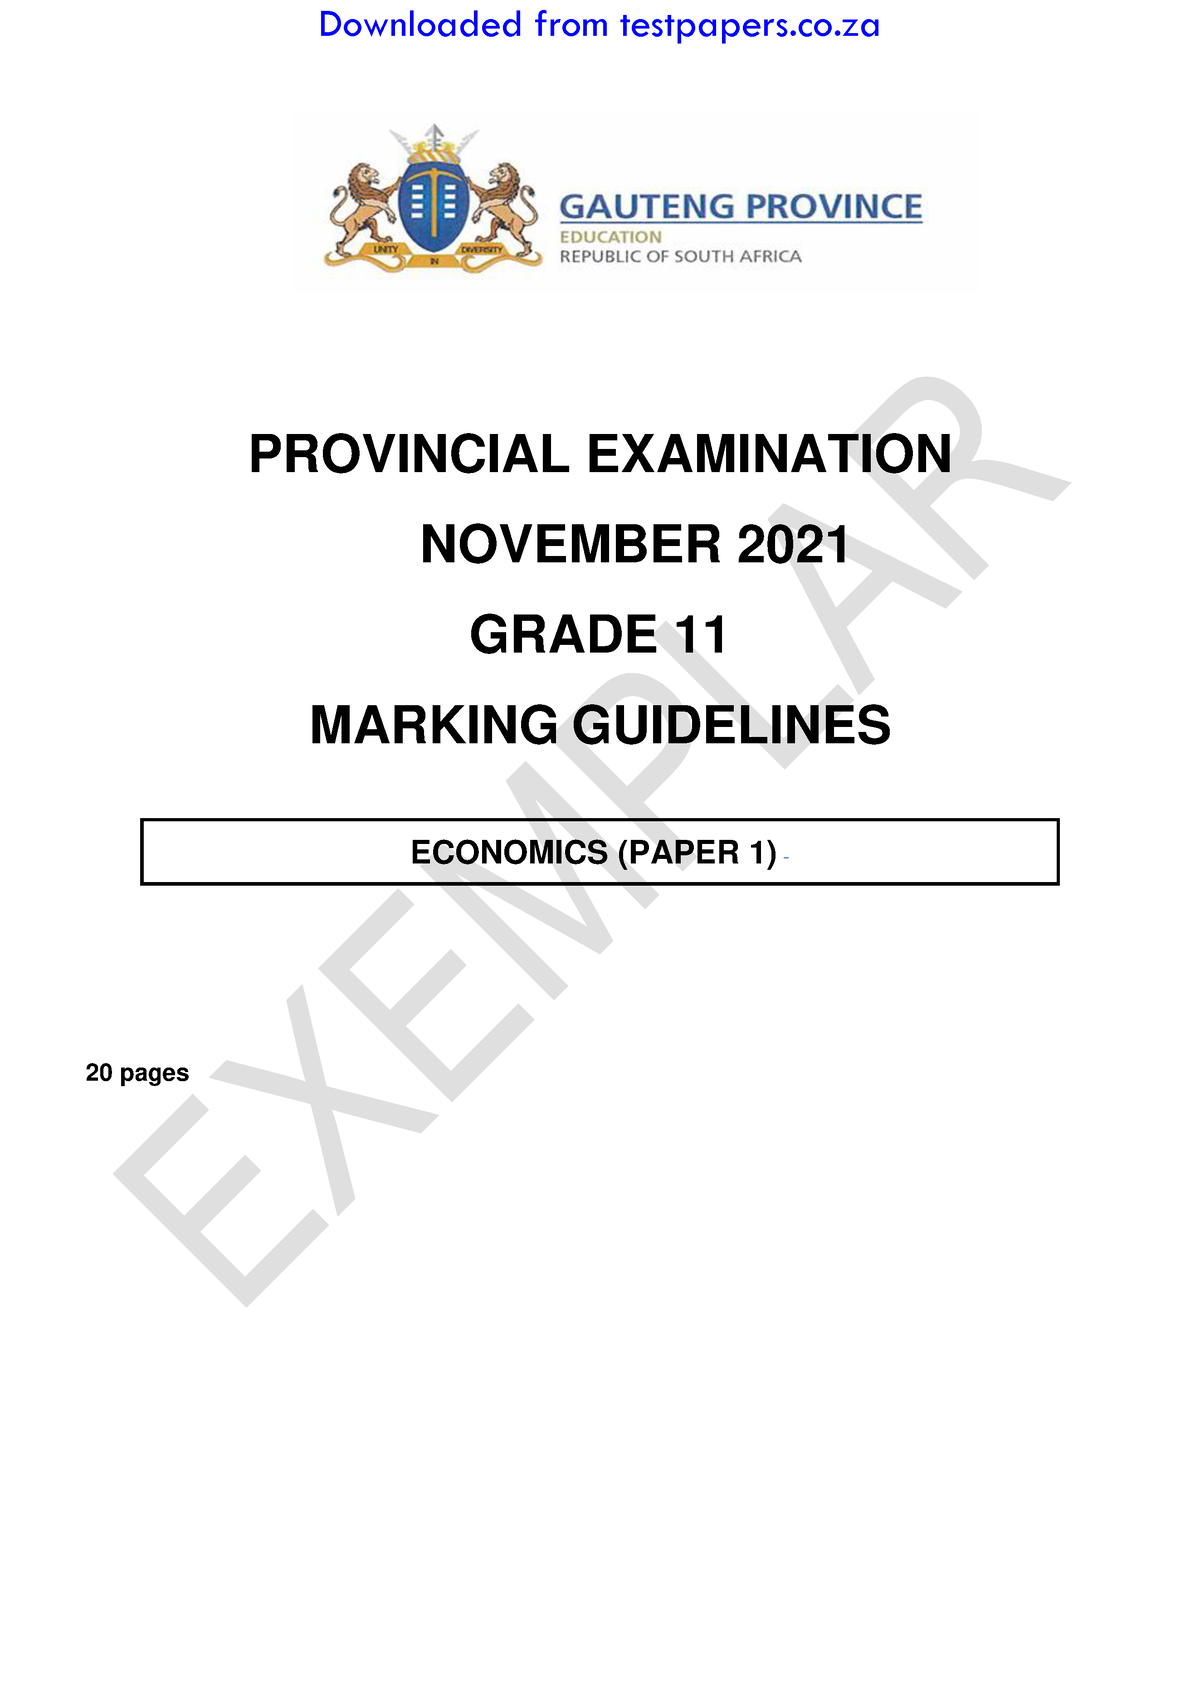 economics grade 11 essays pdf 2020 term 4